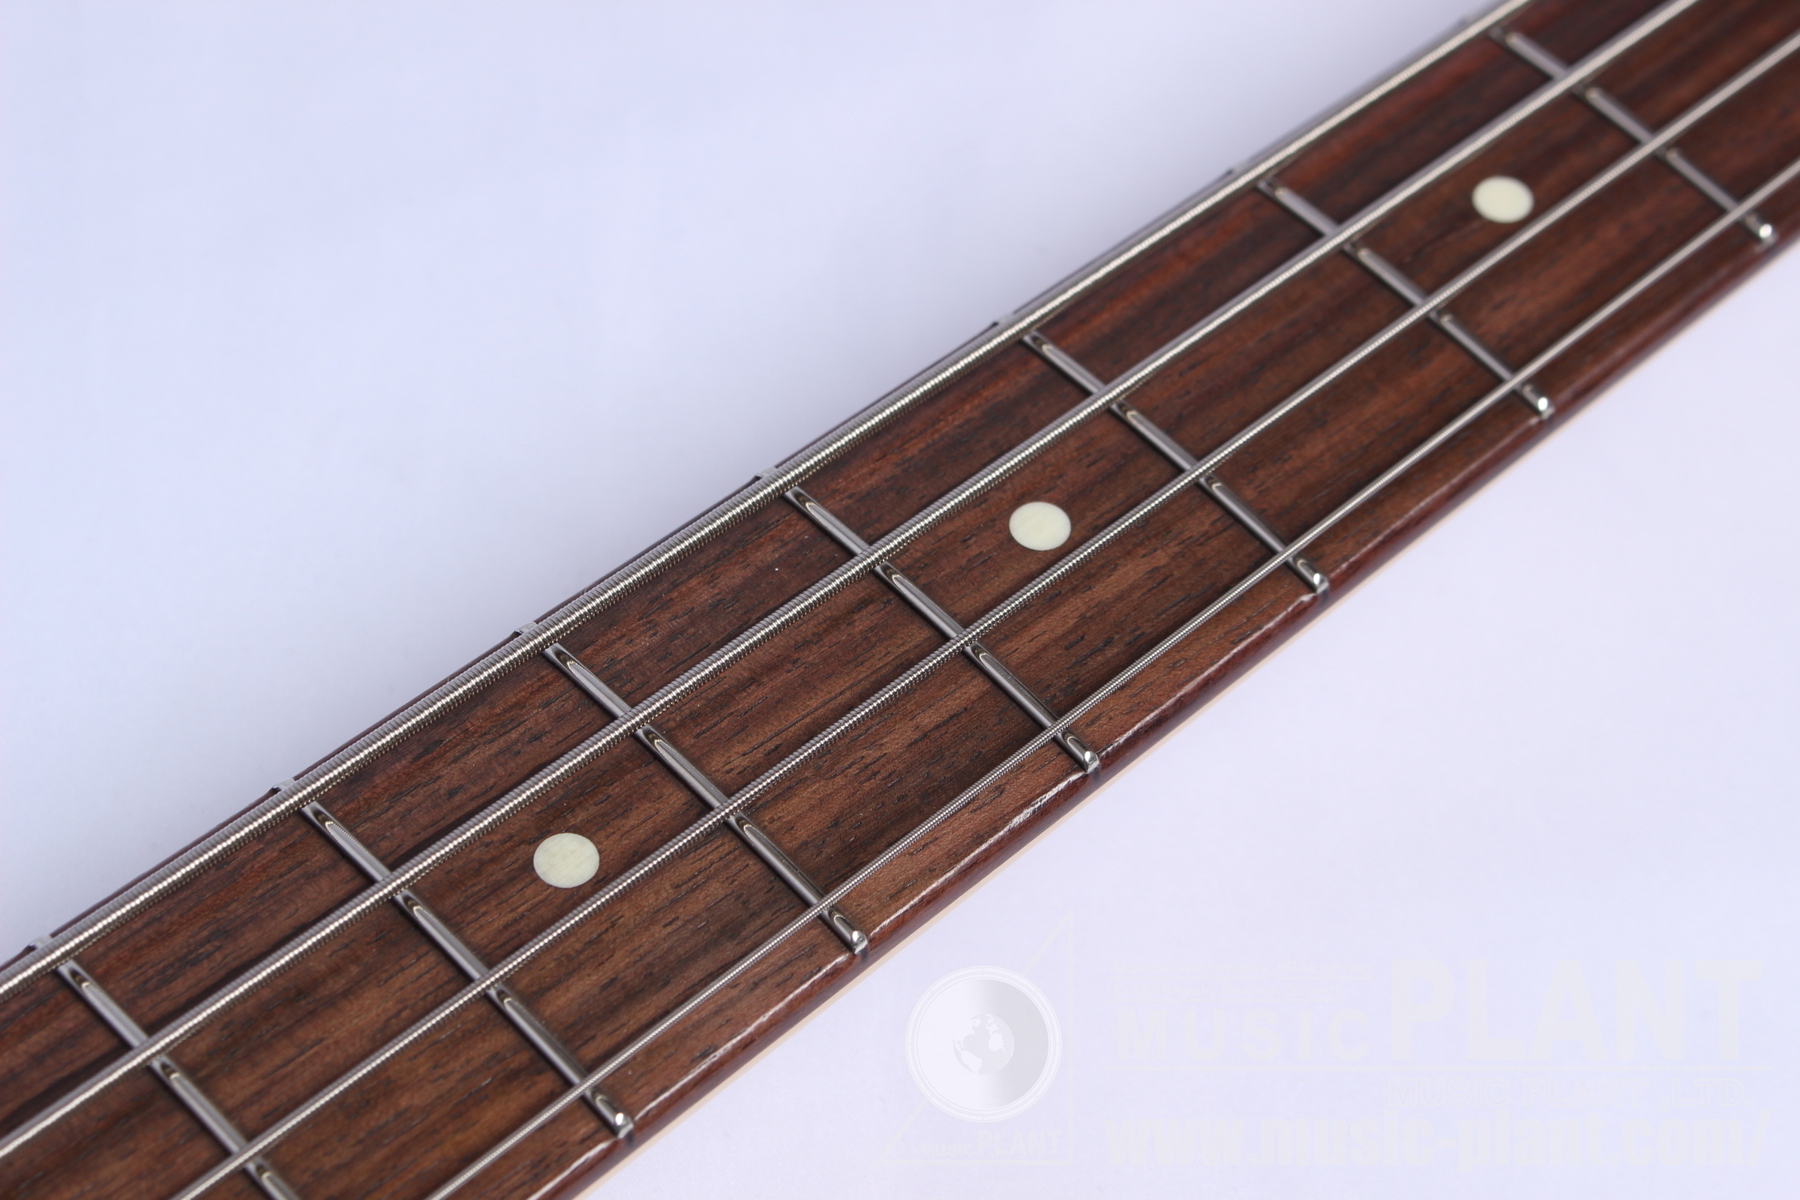 Made in Japan Hybrid  Precision Bass, Rosewood Fingerboard, 3-Color Sunburst追加画像